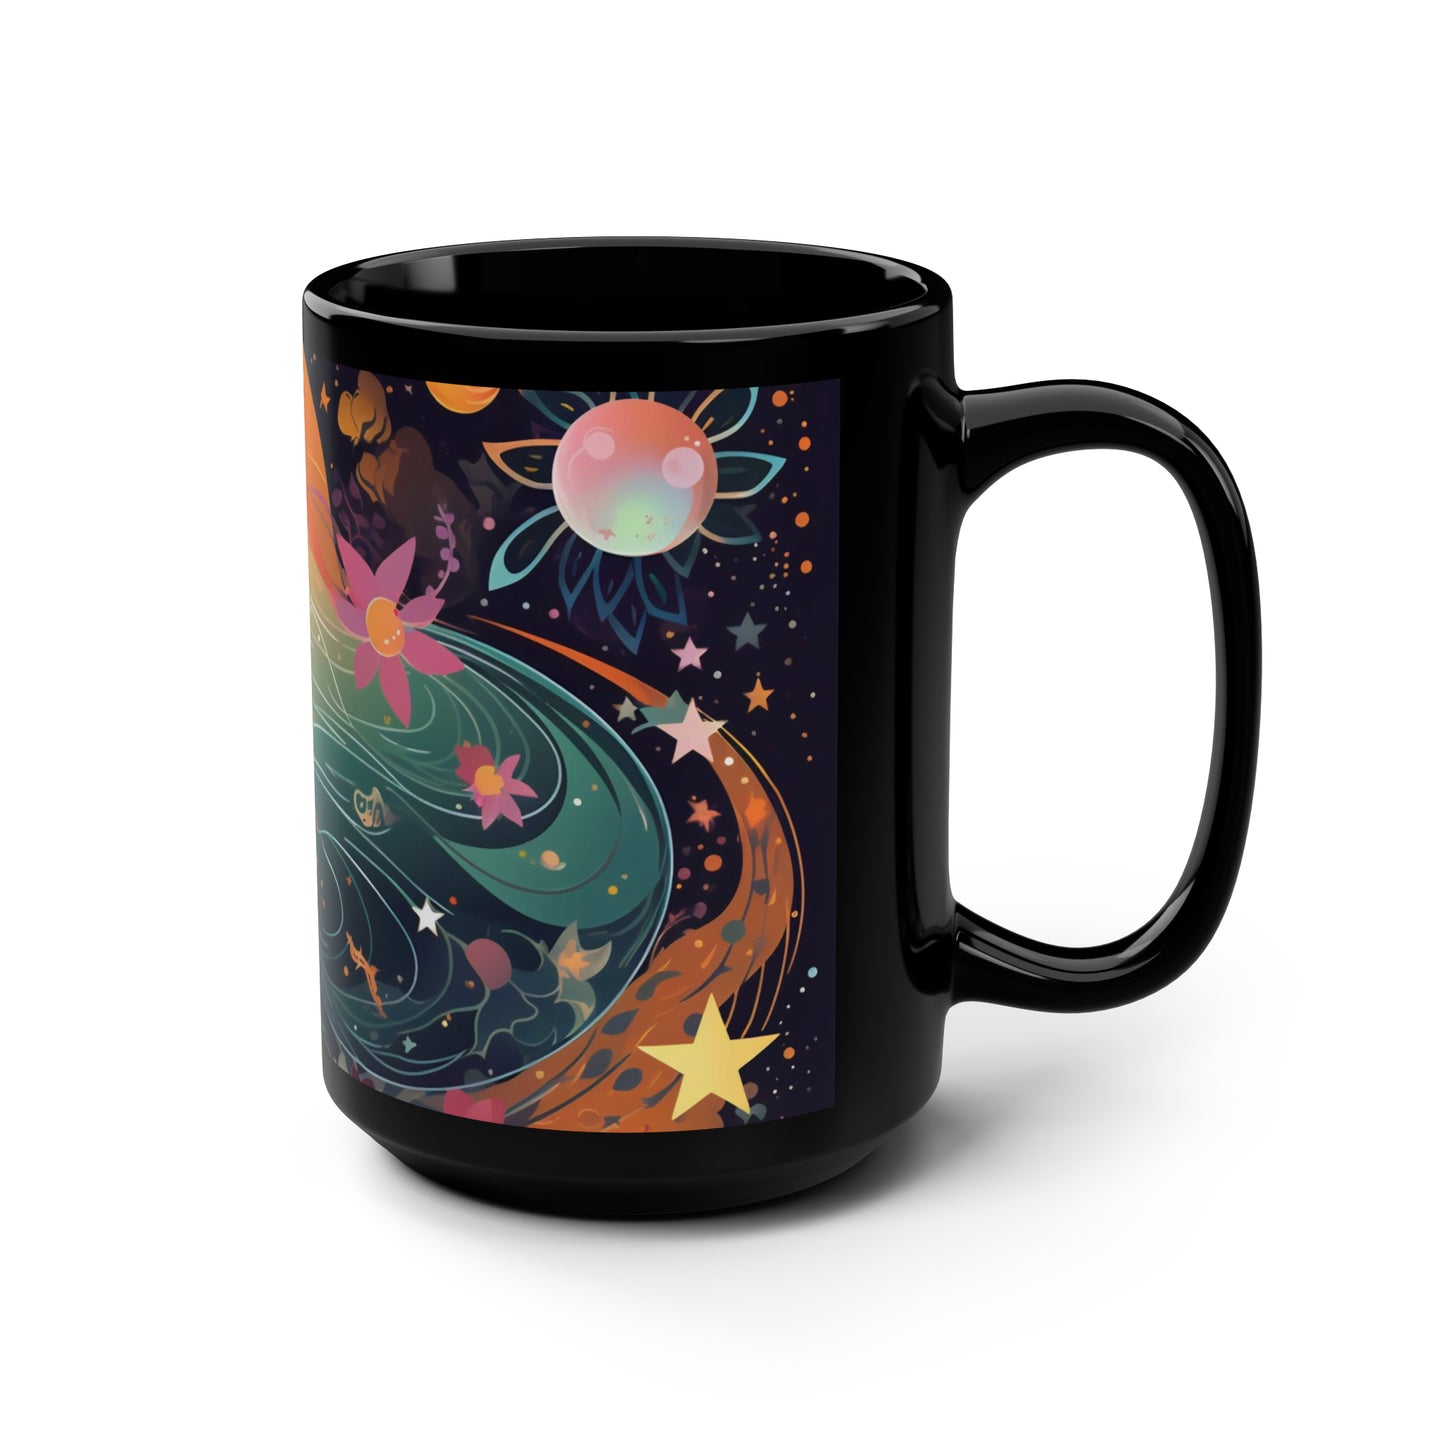 Sleepy Time Mug, Sleeping Lady with Stars and Flowers, Celestial Coffee Mug, Space Beauty Mug, Ceramic Mug 15oz